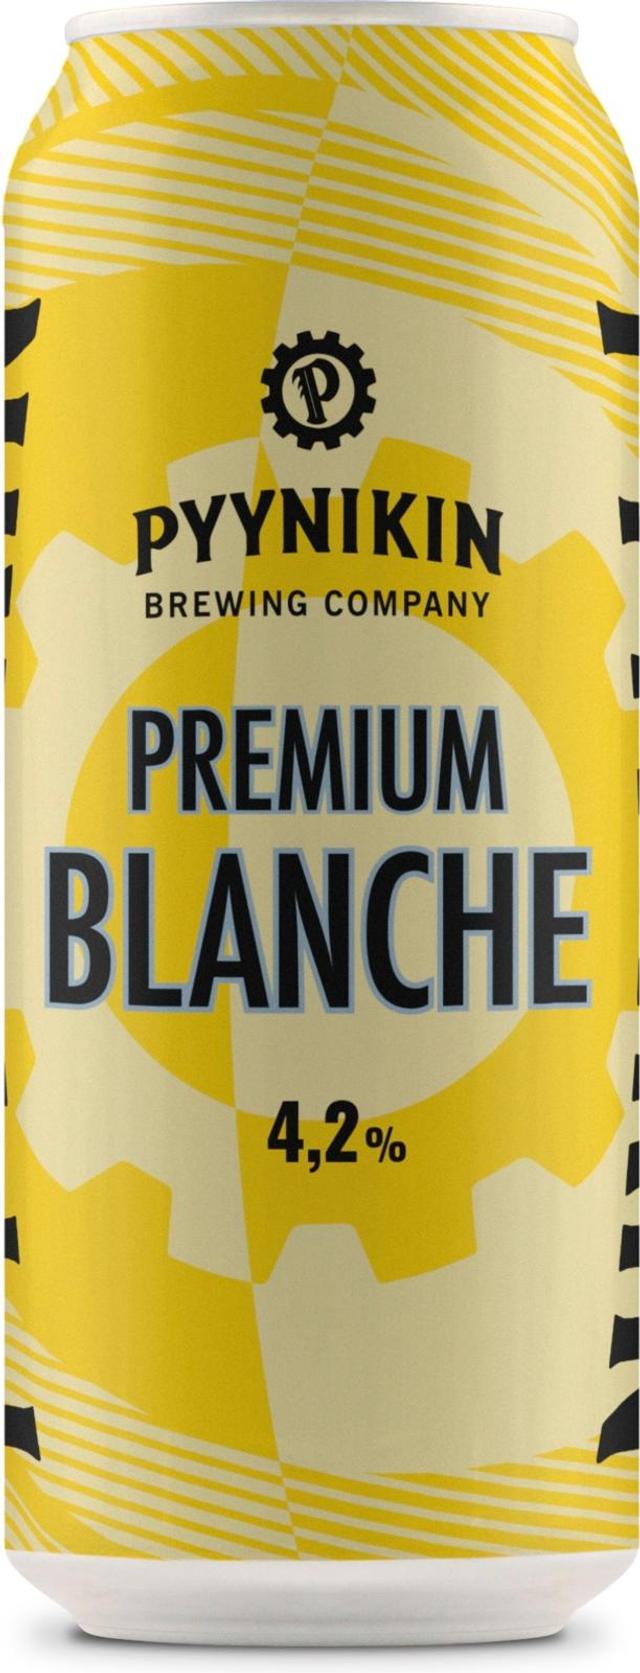 Pyynikin Brewing Company Premium Blanche 4,2% vehnäolut 0,5l